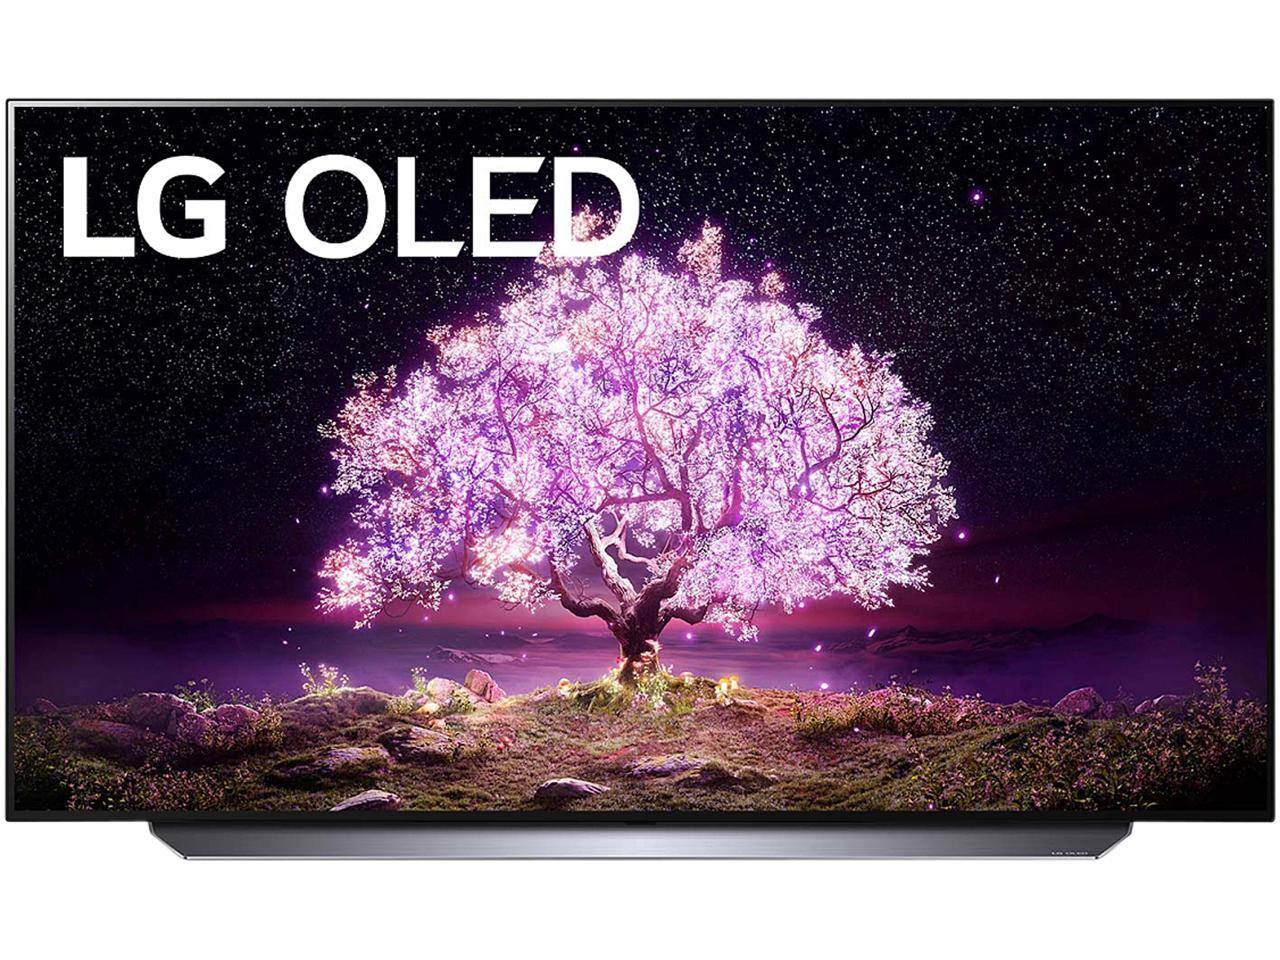 LG 55" OLED55C1PUB 4K Smart OLED TV + $50 VISA GC + 3 Year Warranty (includes accidental damage coverage) $1,296.99 + FS $1296.99